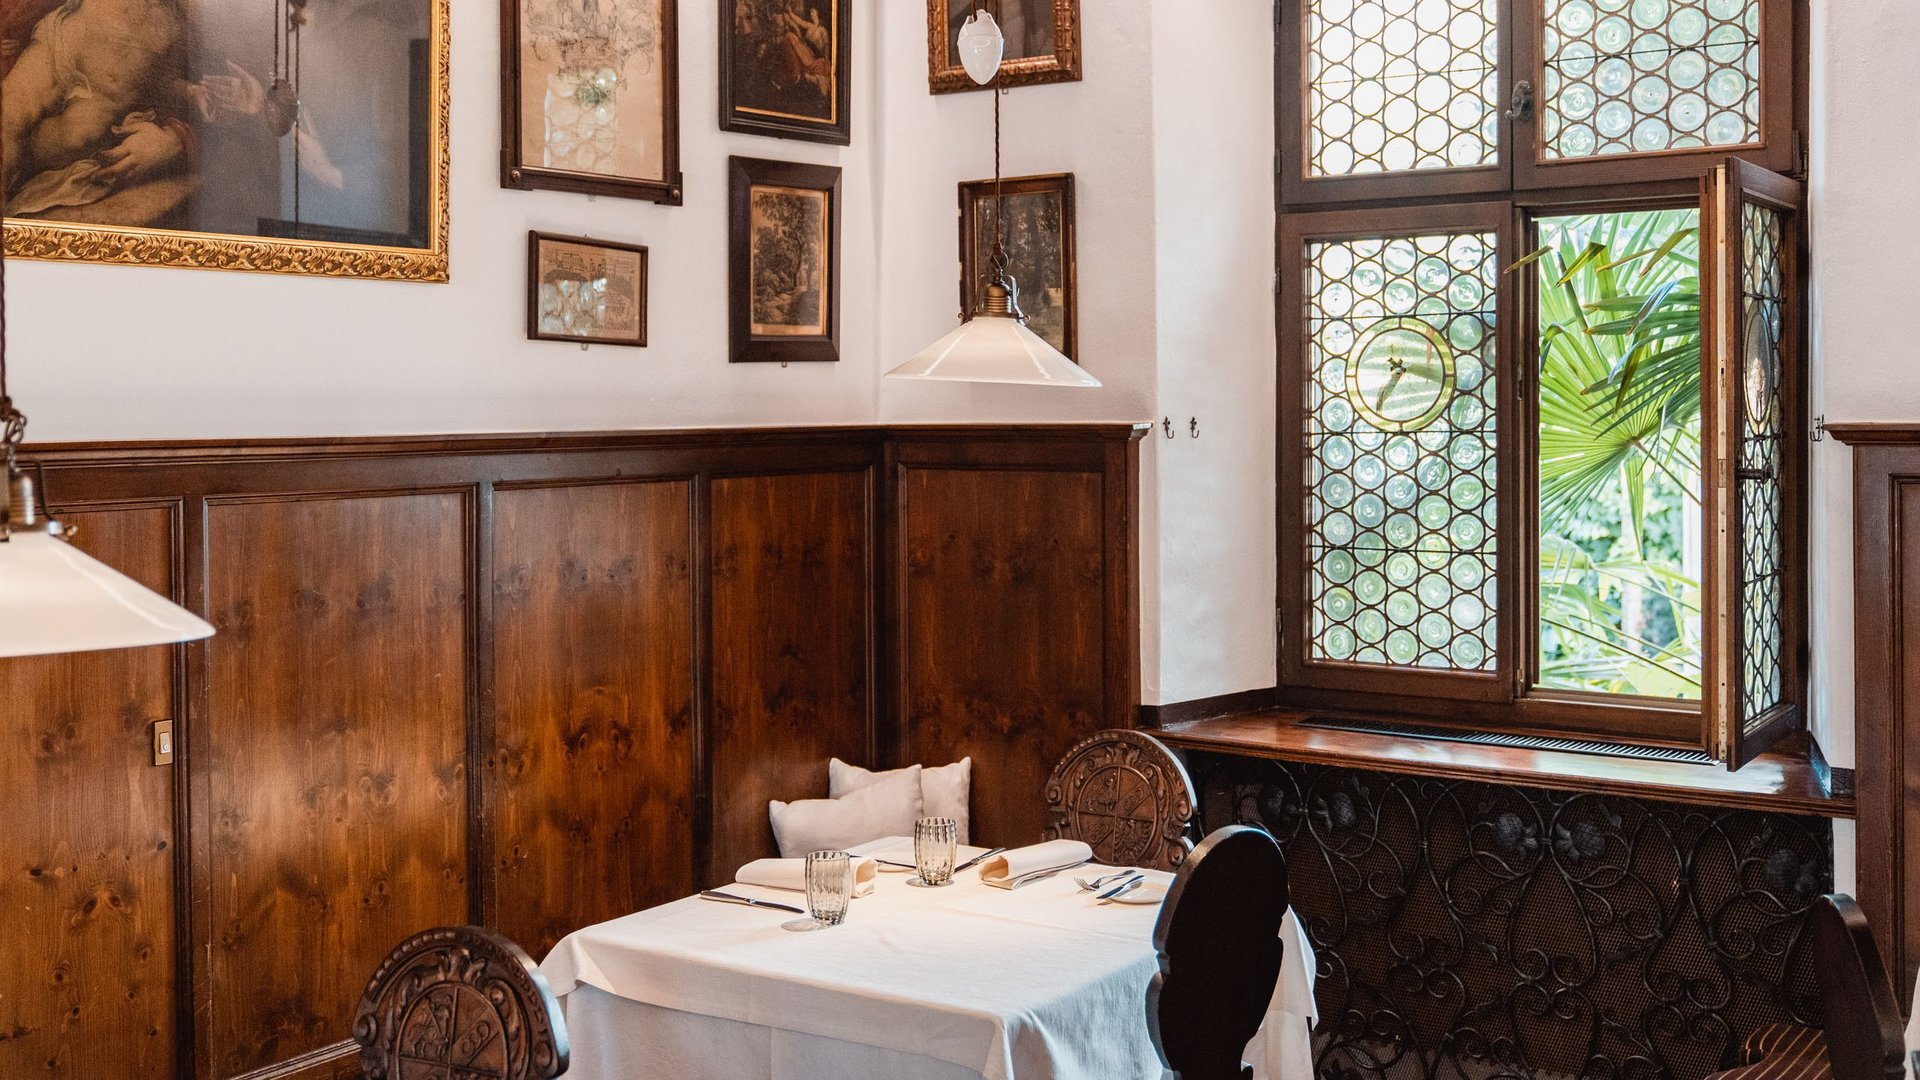 Brixen’s Finsterwirt – THE restaurant in Valle Isarco